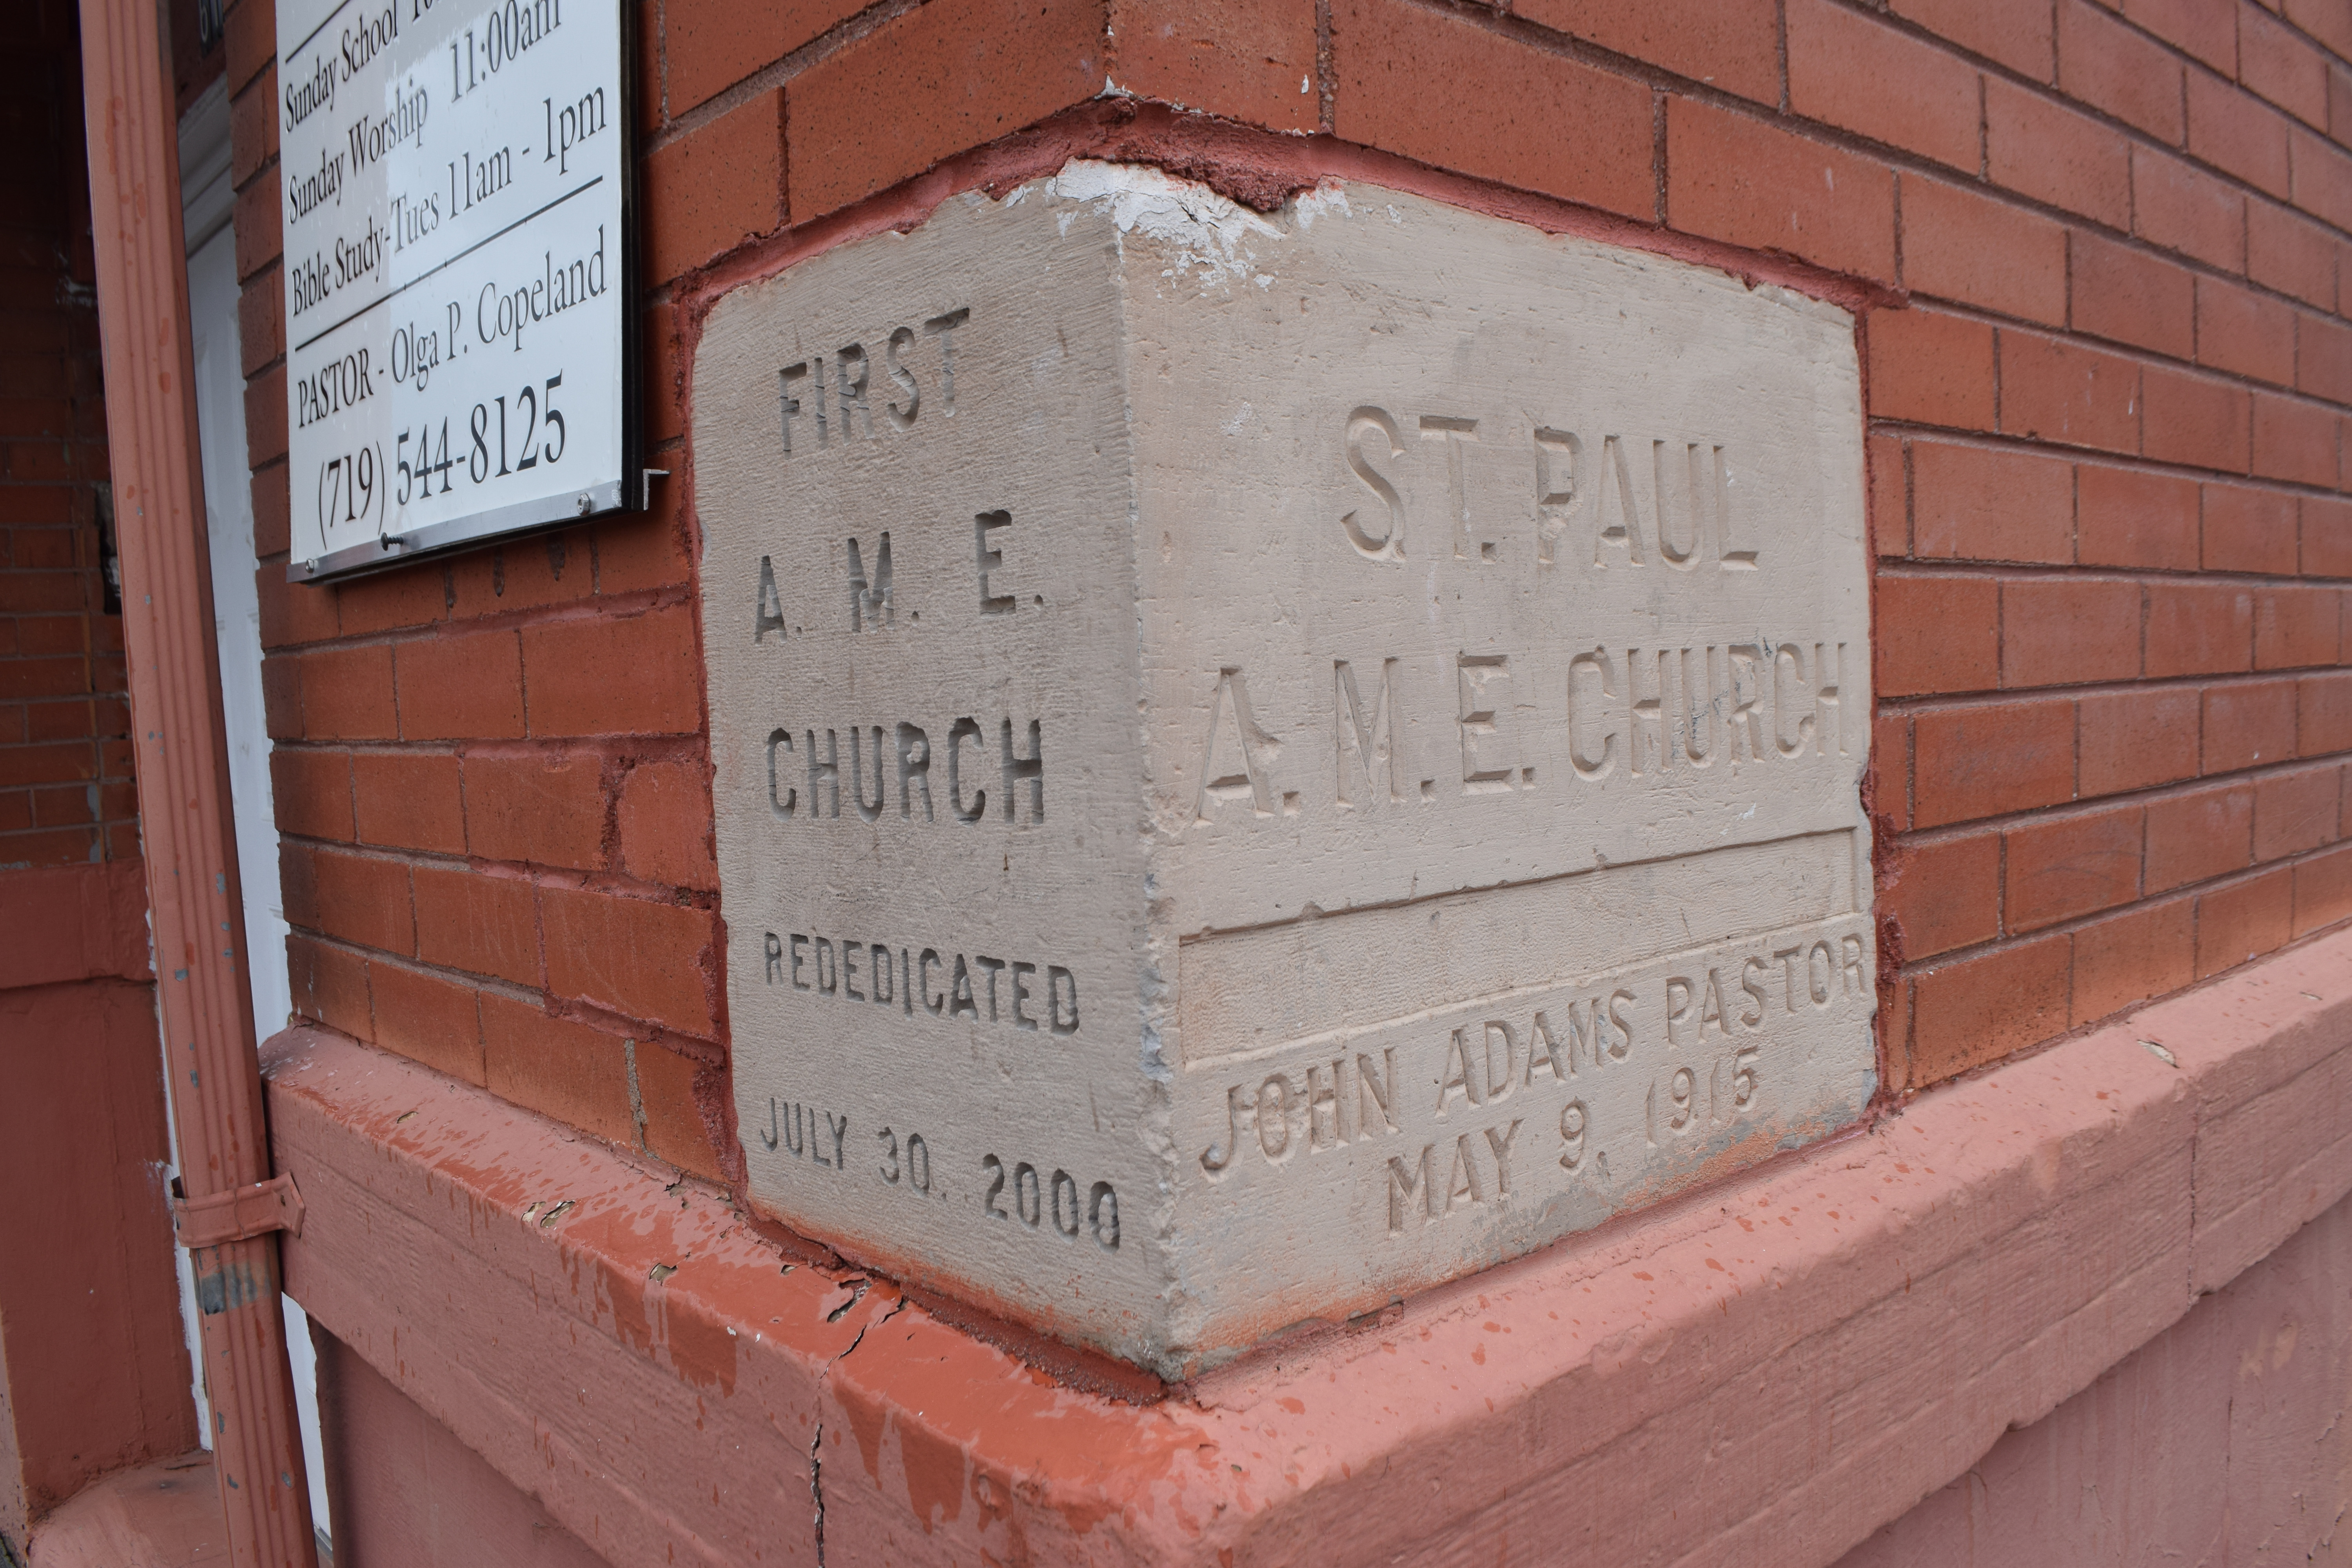 Cornerstone of the St. Paul AME Church.